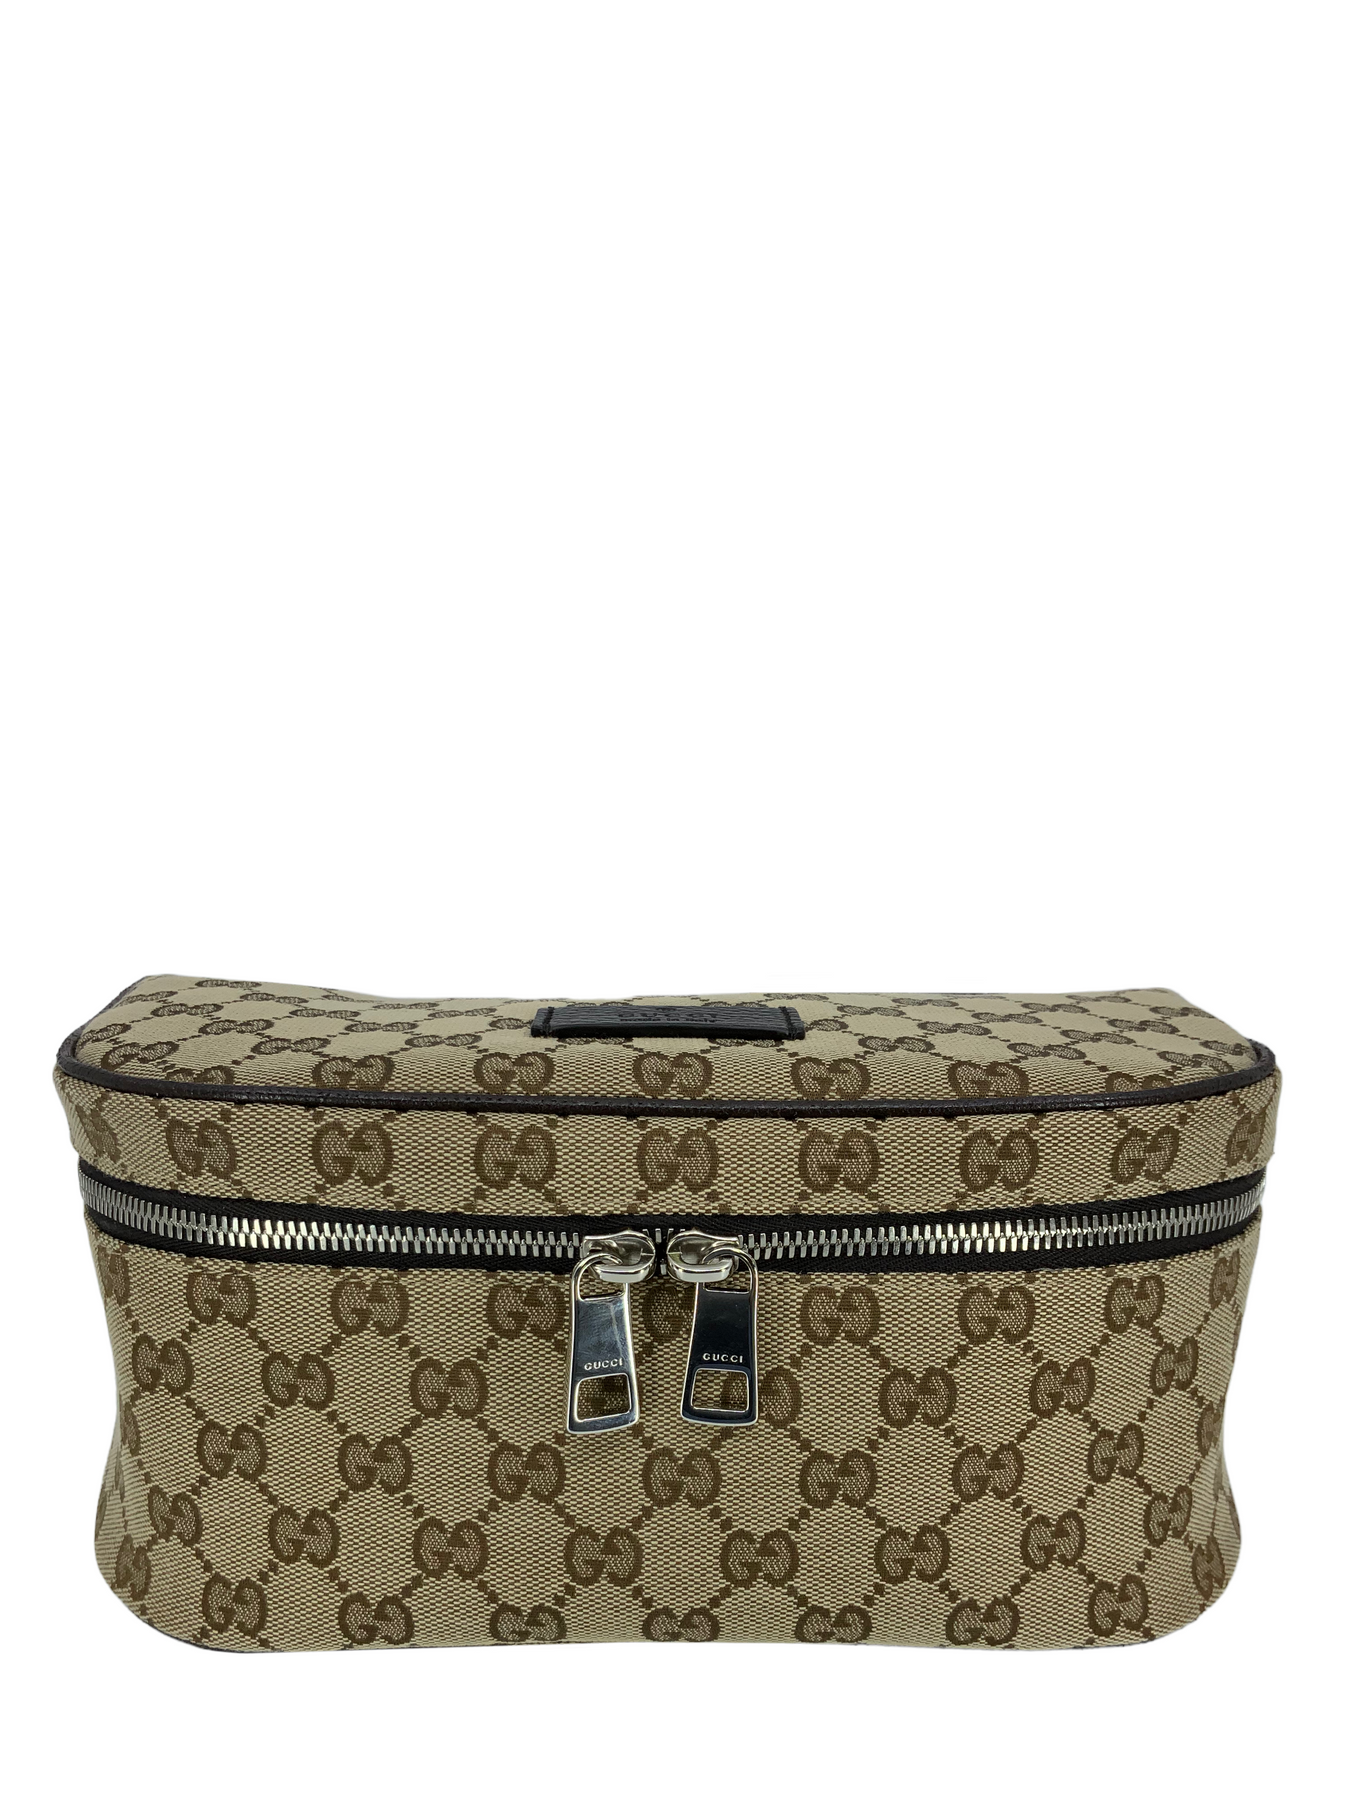 Gucci GG Supreme Small Belt Bag | Gucci Handbags | Bag Borrow or Steal